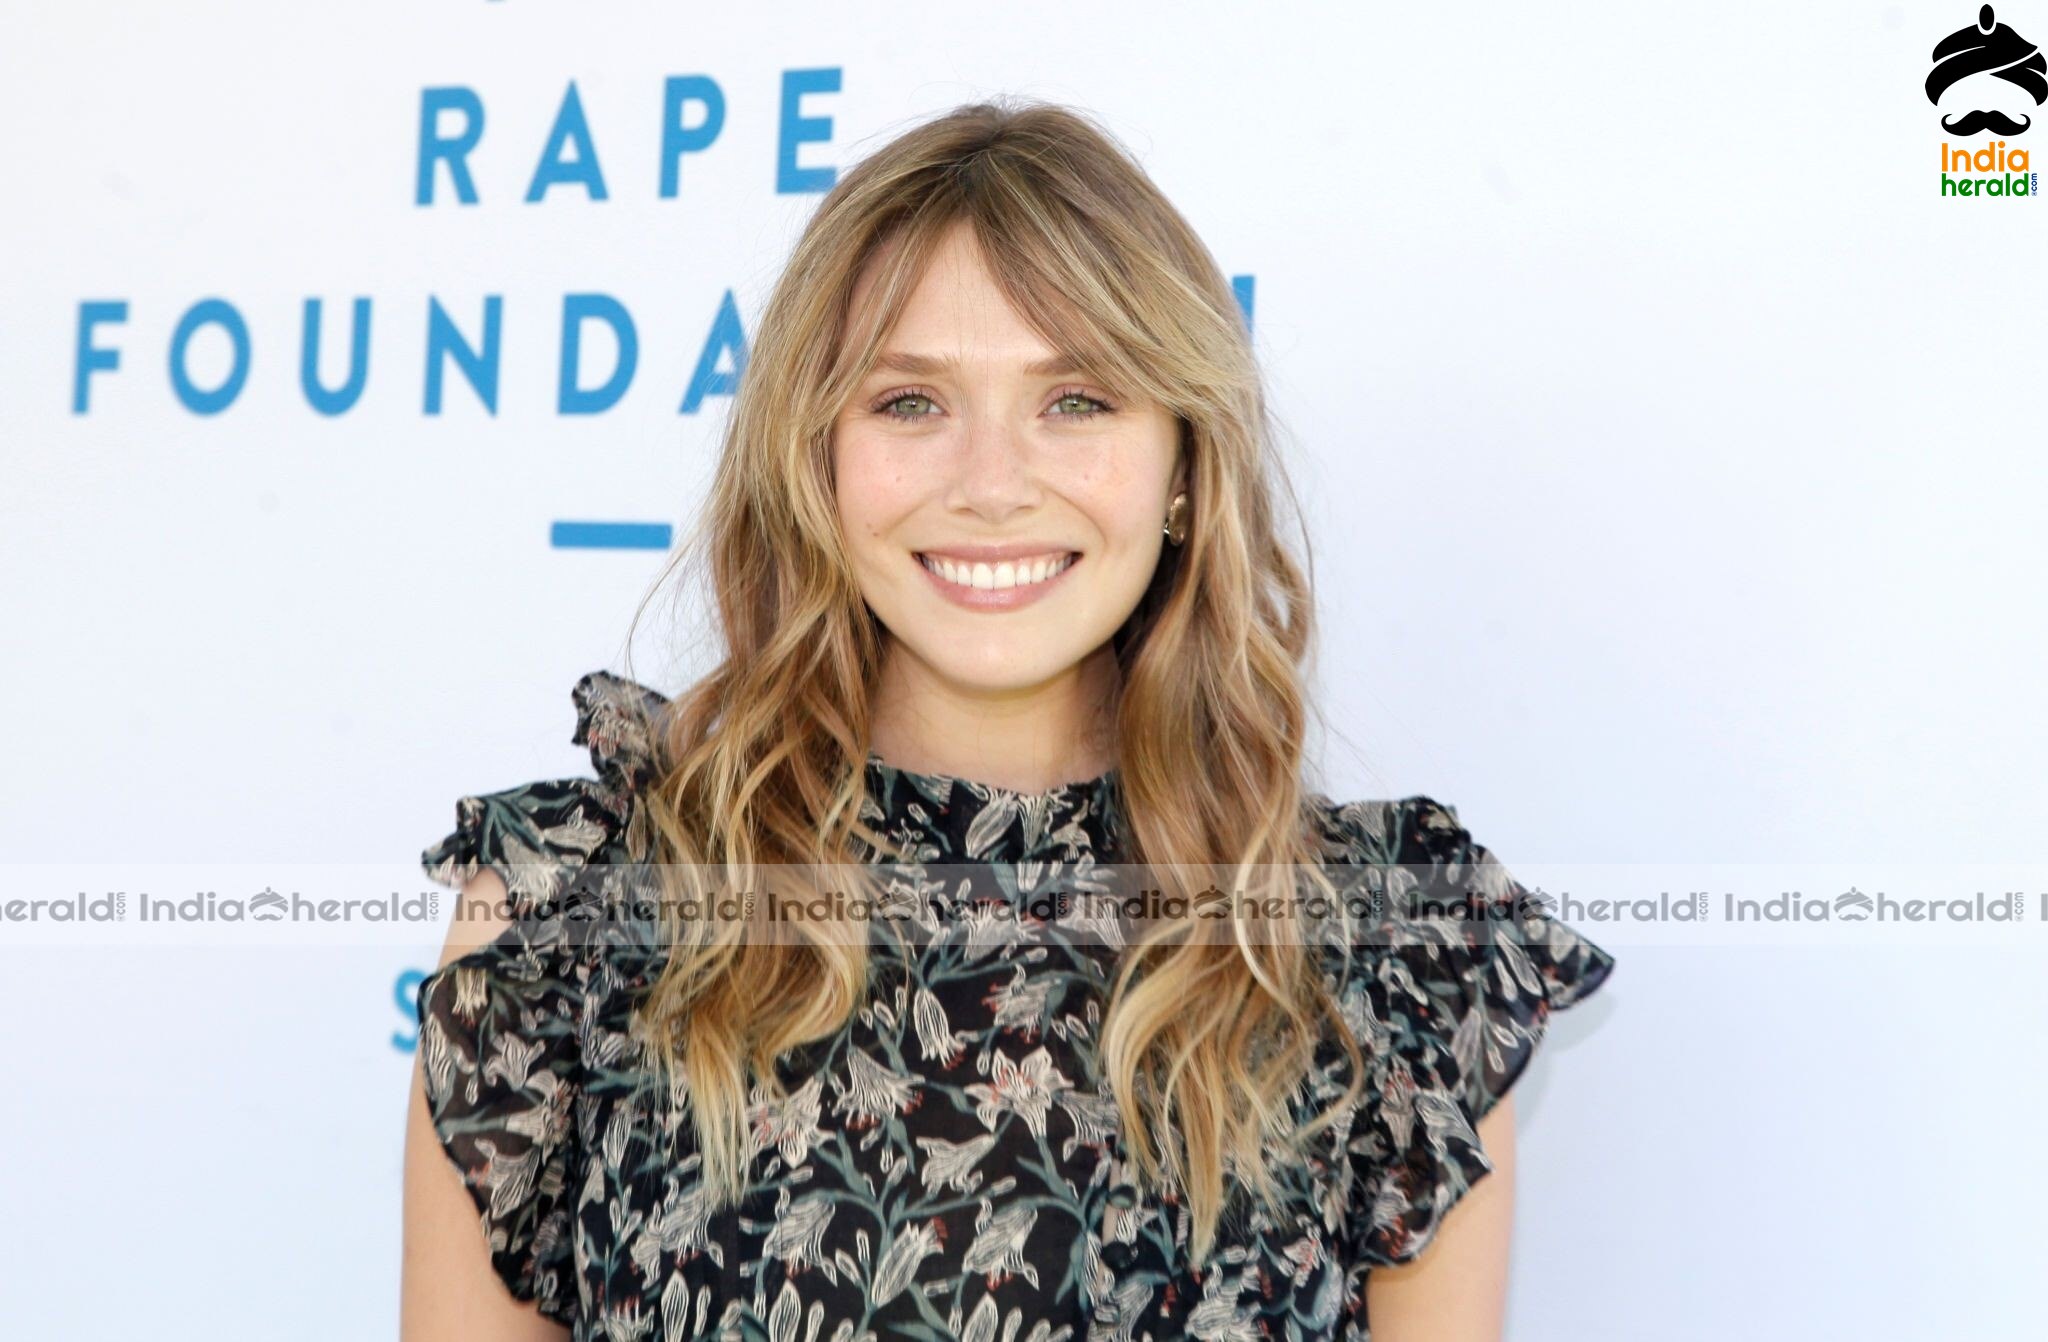 Elizabeth Olsen Attends The Rape Foundation 2019 Annual Brunch Set 2